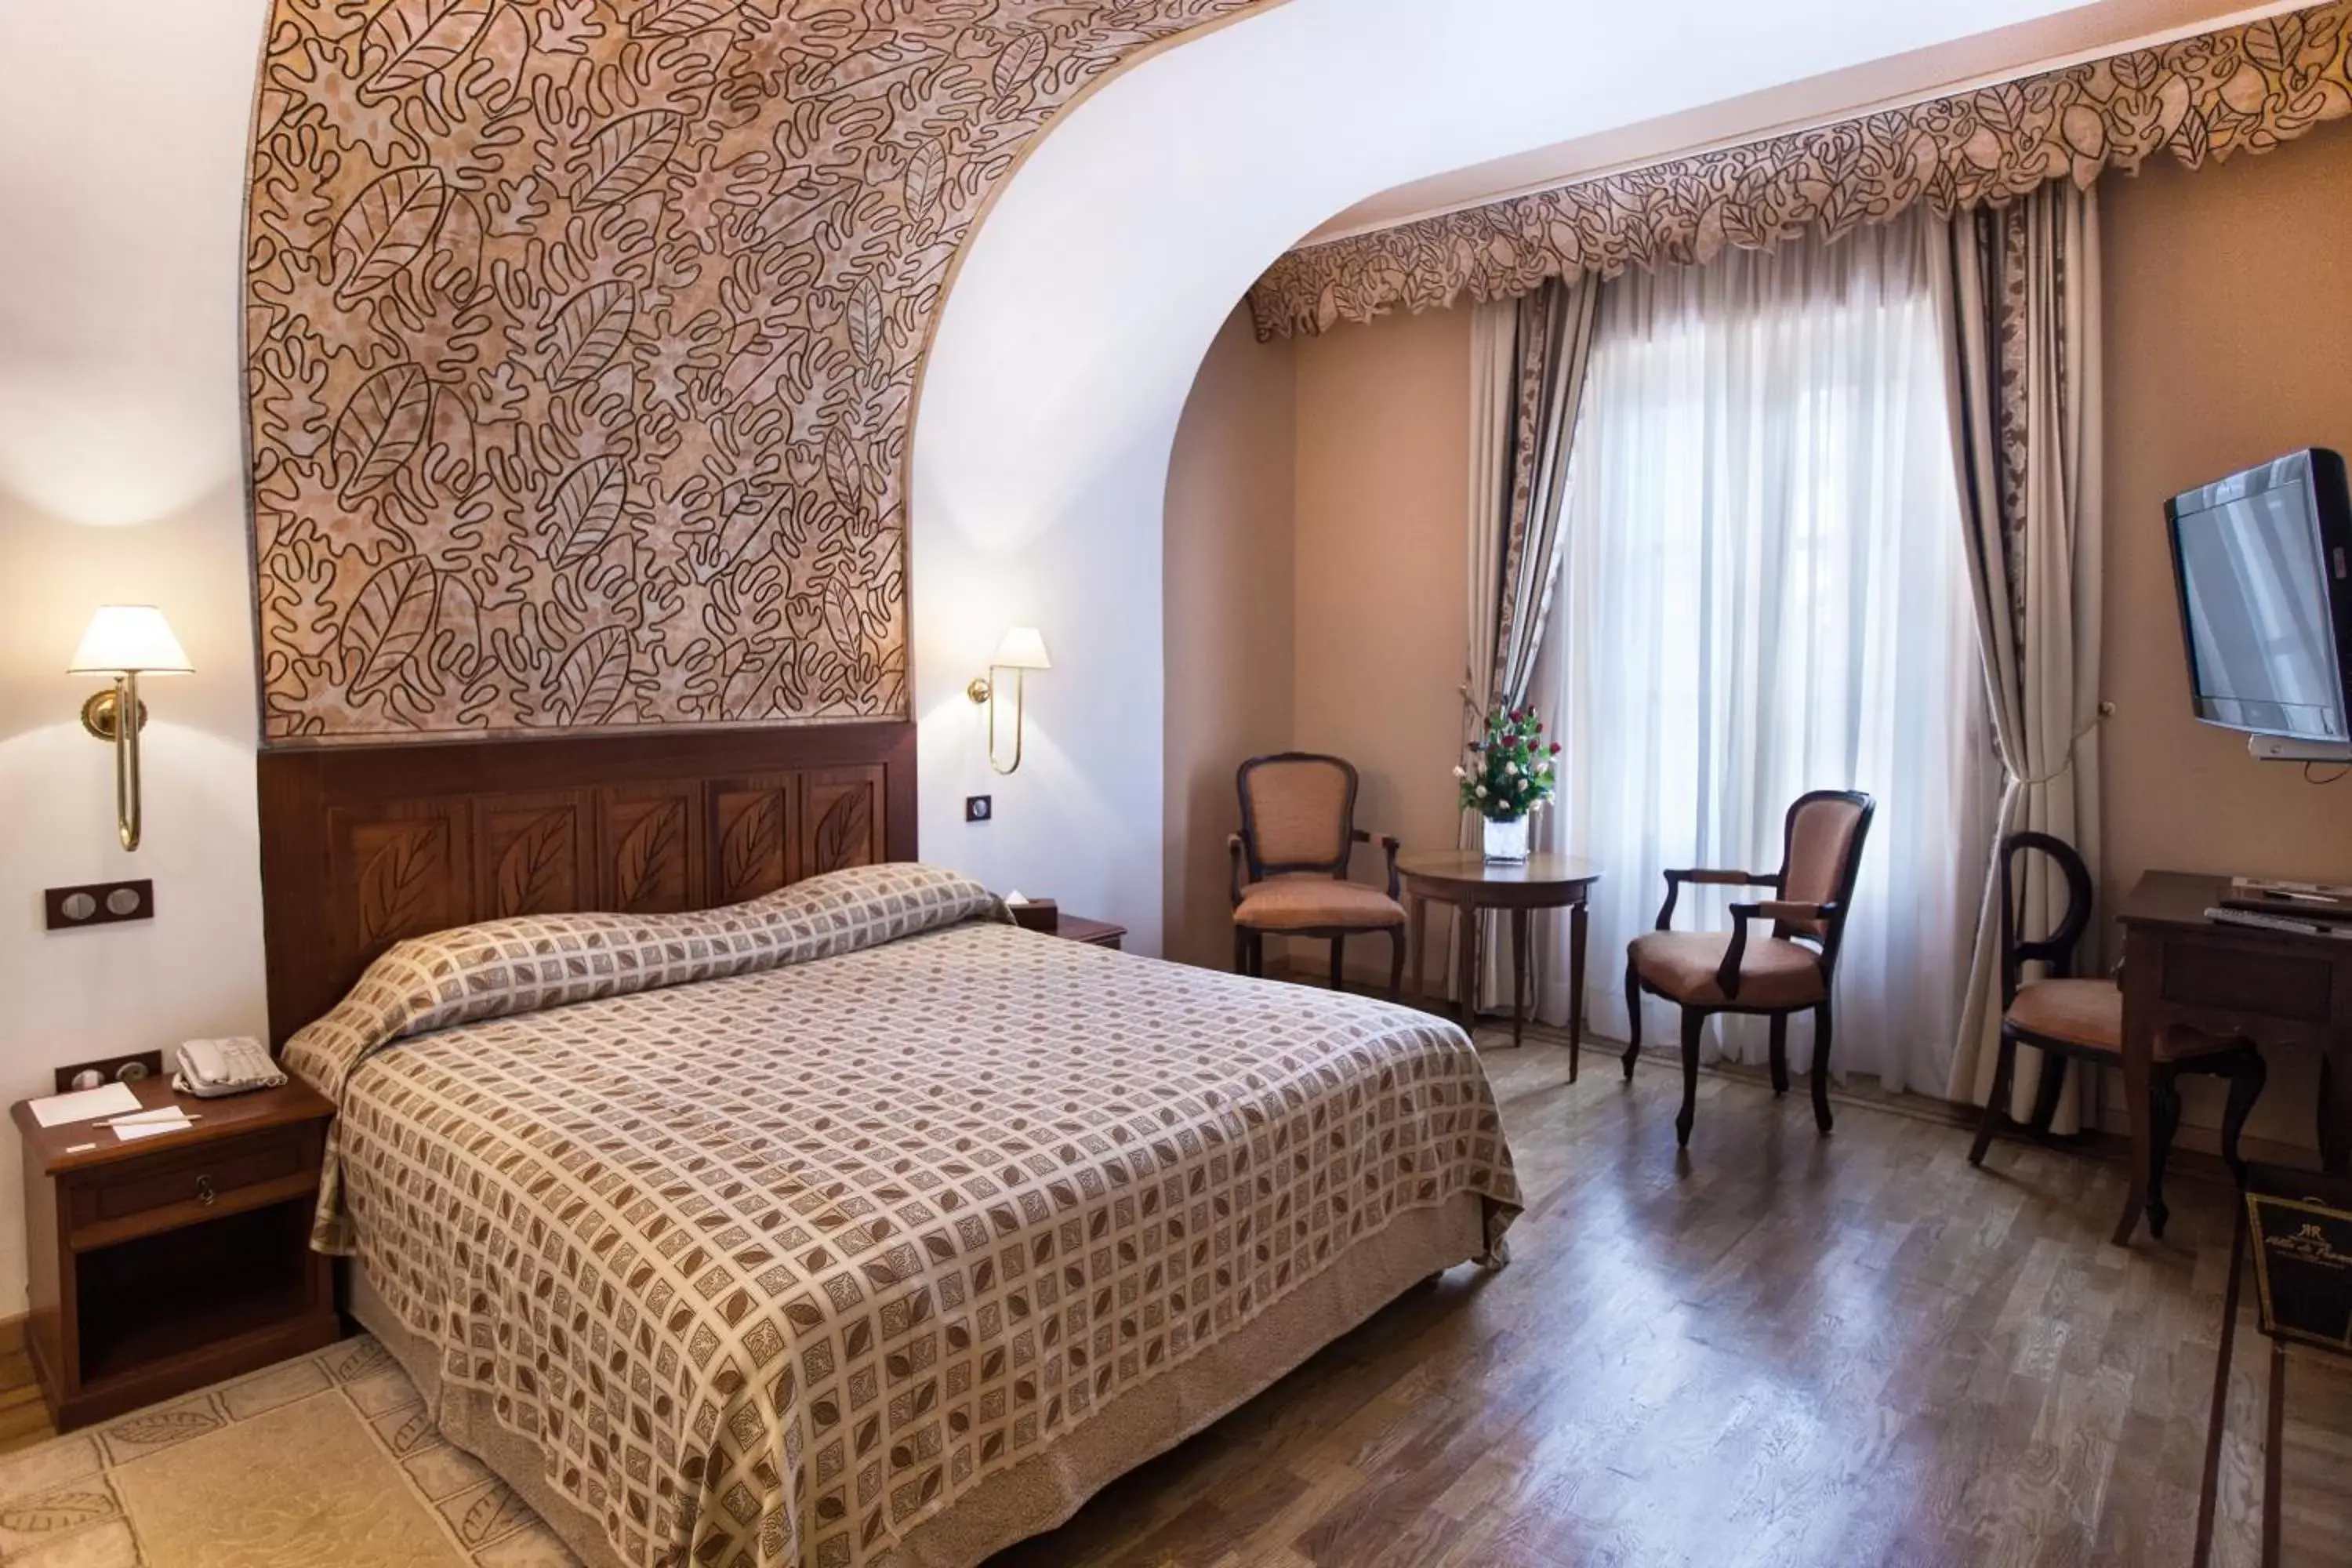 Bedroom, Room Photo in Grand Hotel Villa de France